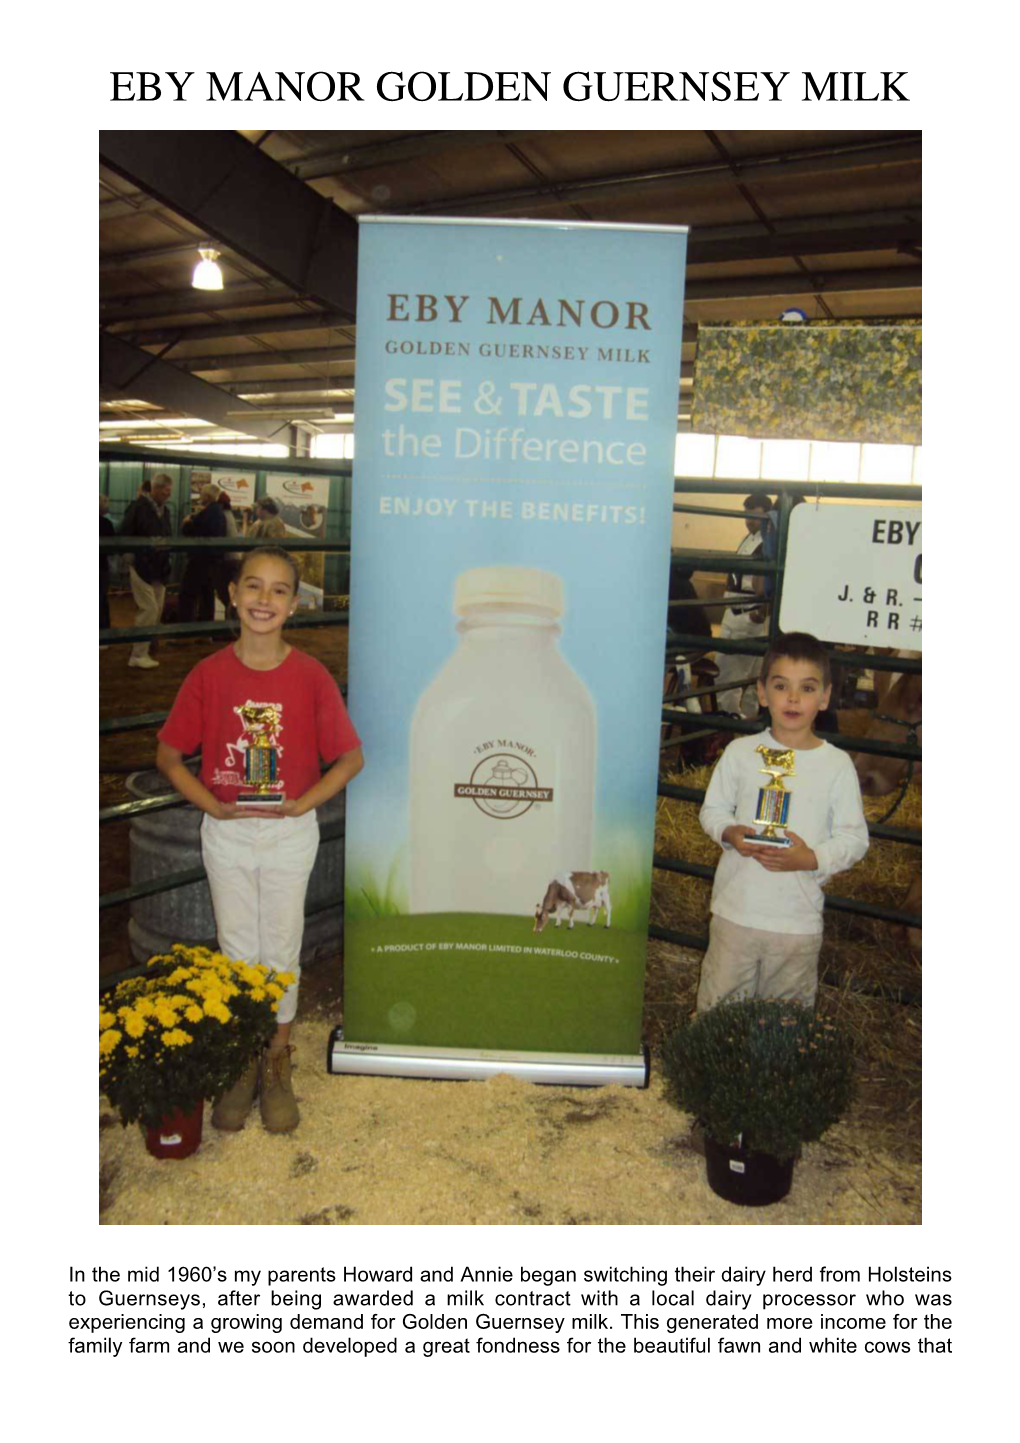 Eby Manor Golden Guernsey Milk